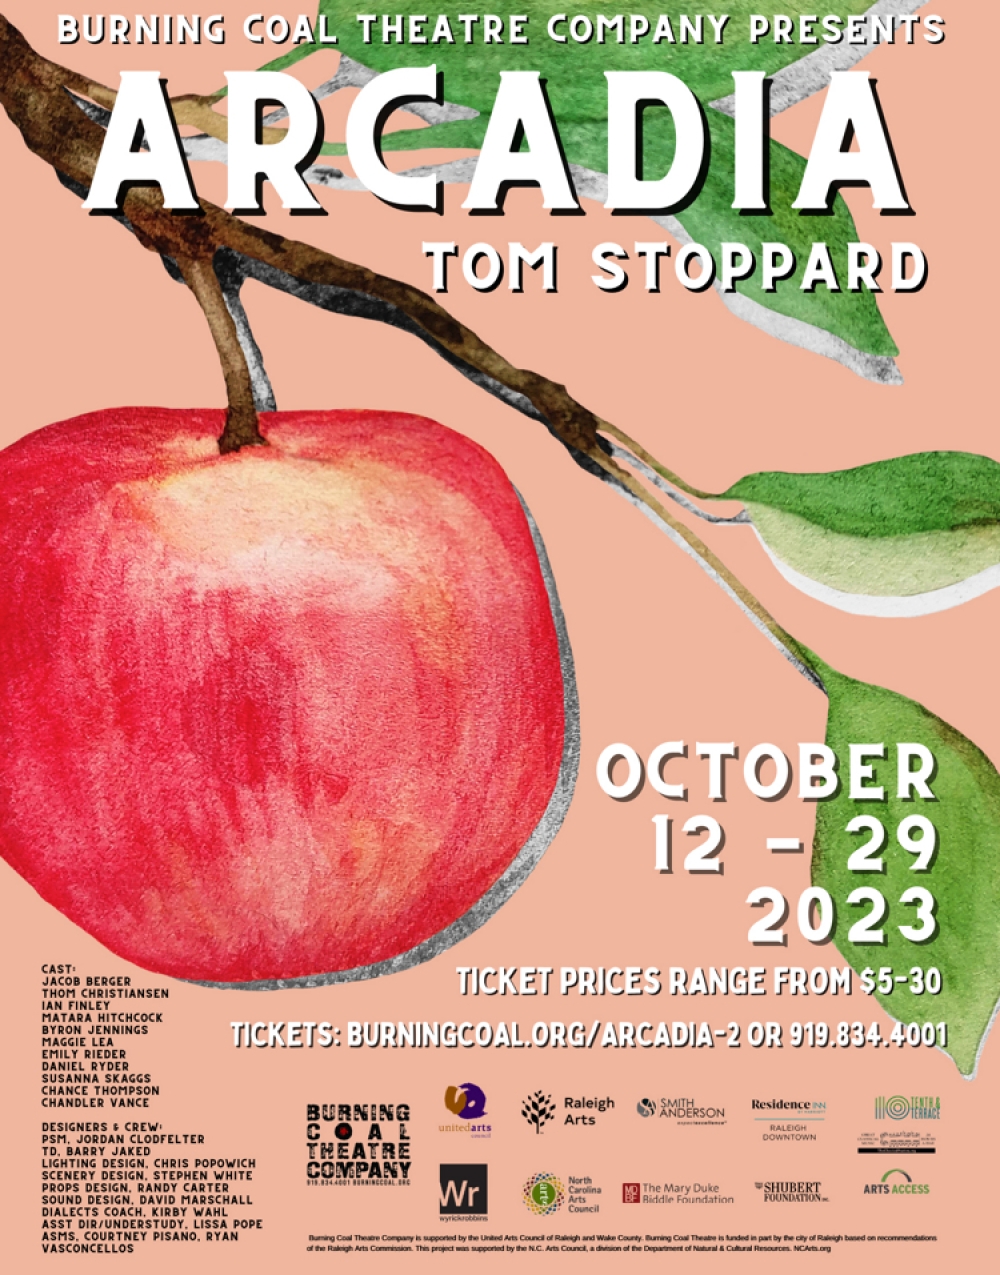 Arcadia - Burning Coal Theatre Company Stage Mag